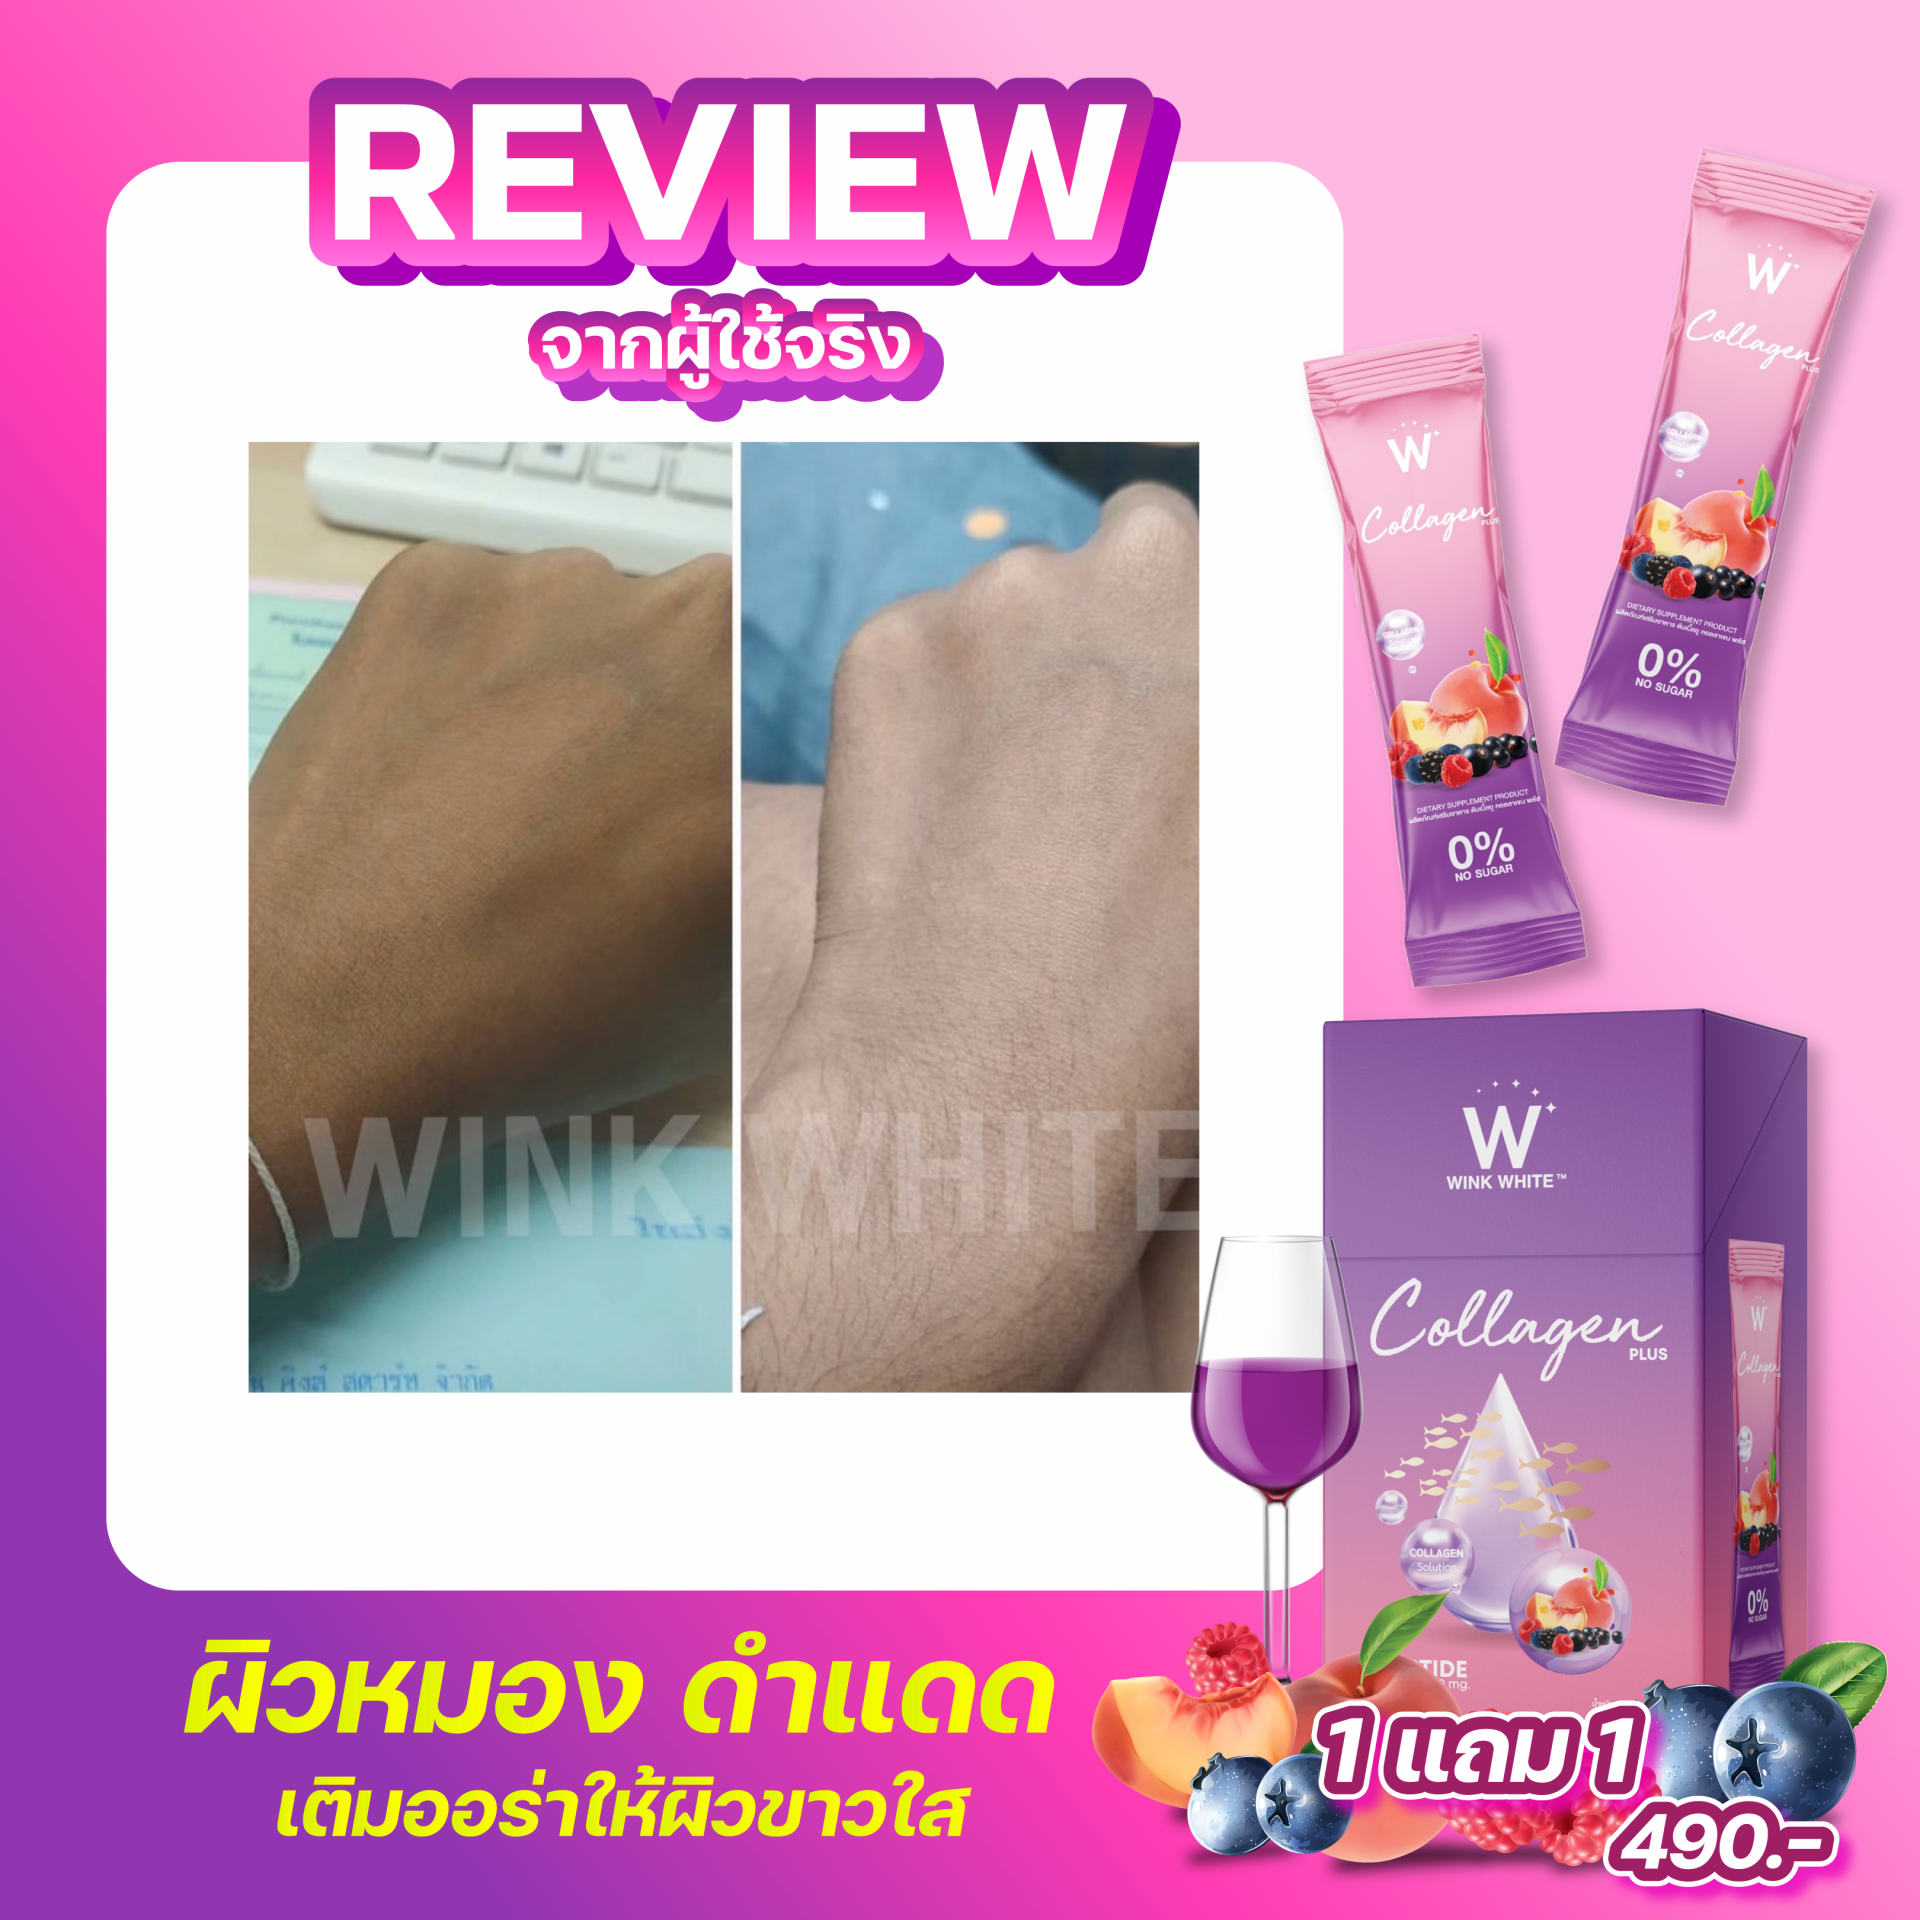  Review ผู้ใช้จริง (WINK WHITE W Collagen Plus) ดับเบิ้ลยู คอลลาเจนพลัส